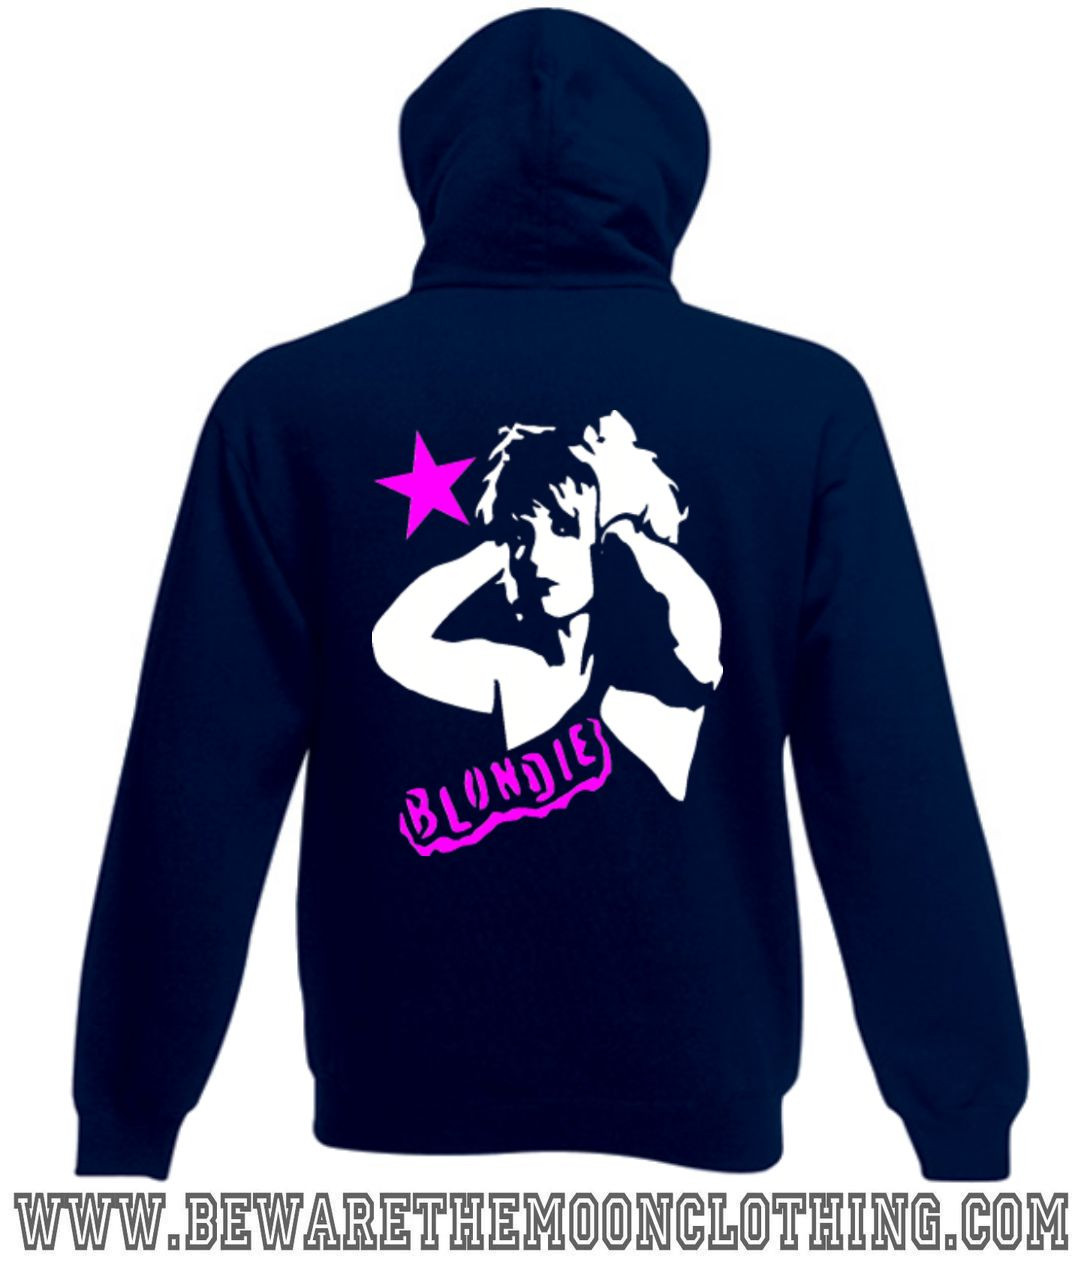 Shop Retro Blondie Band Shirt, Pretty Attitude, Rock Clothing